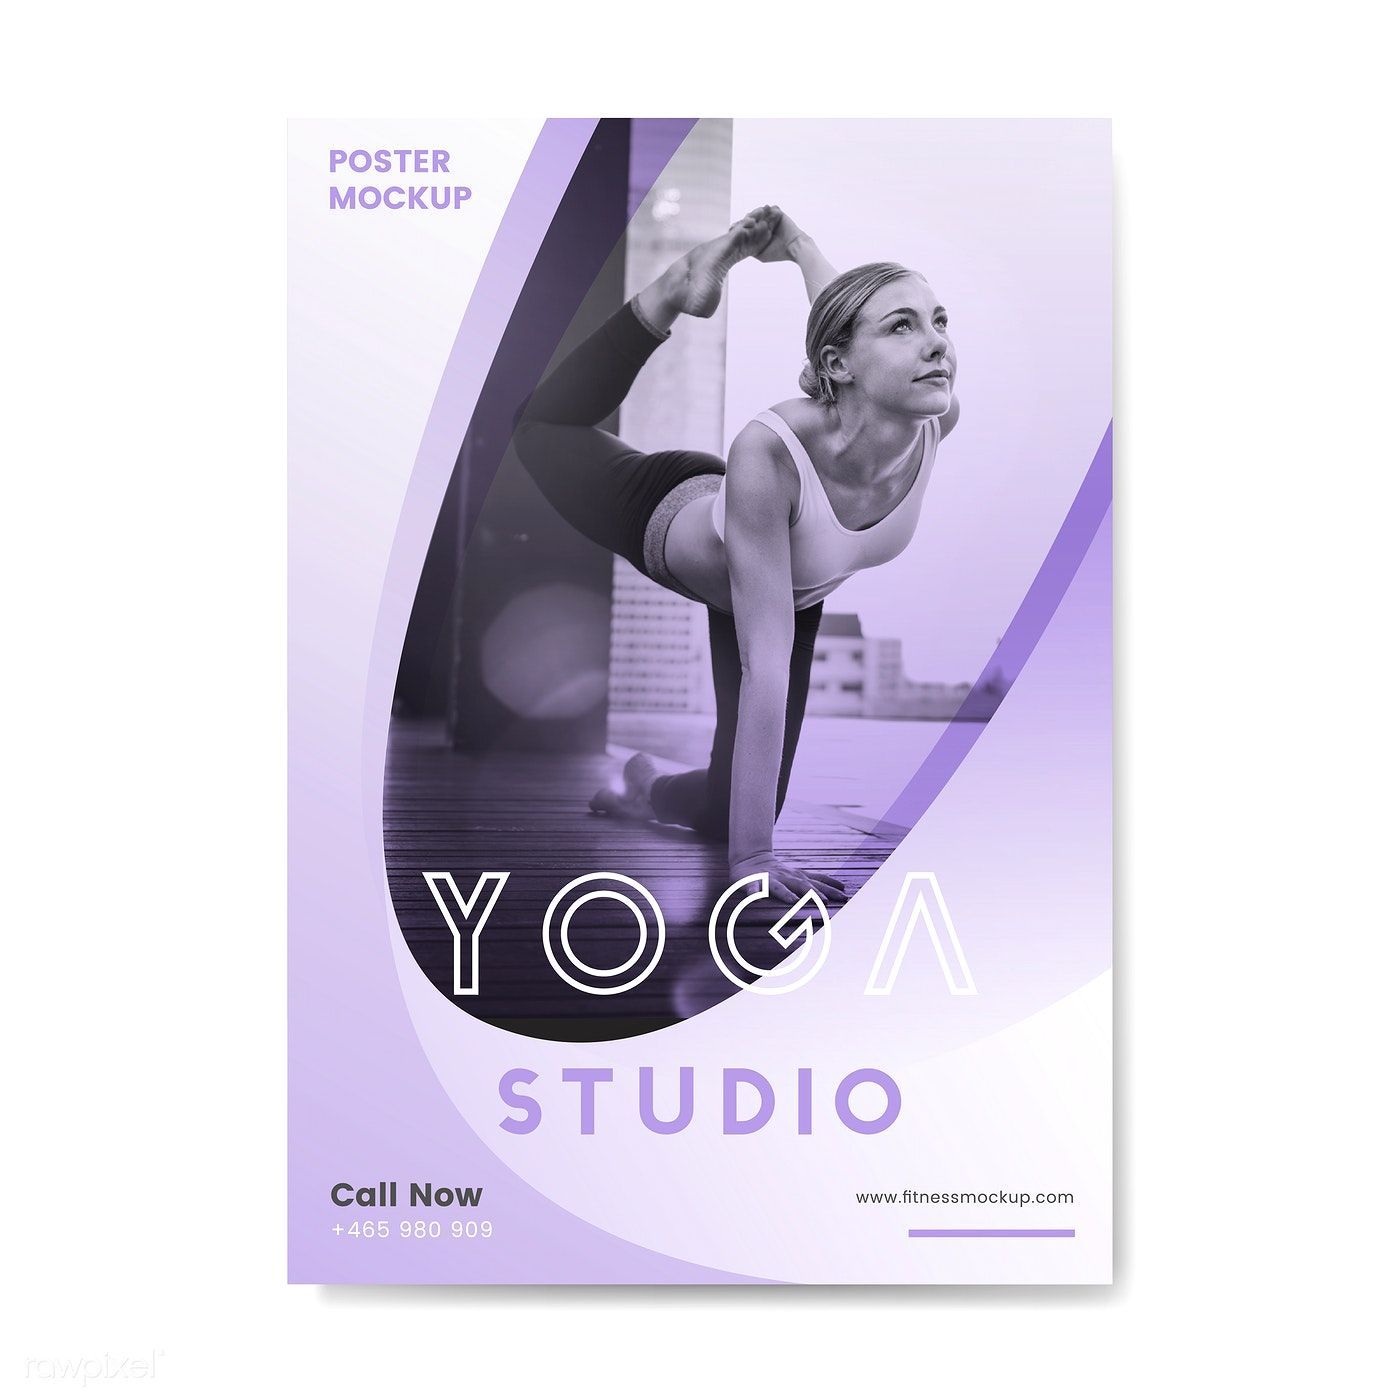 Download free vector of Yoga studio promotional poster vector 533082 - Download free vector of Yoga studio promotional poster vector 533082 -   10 fitness Poster vector ideas